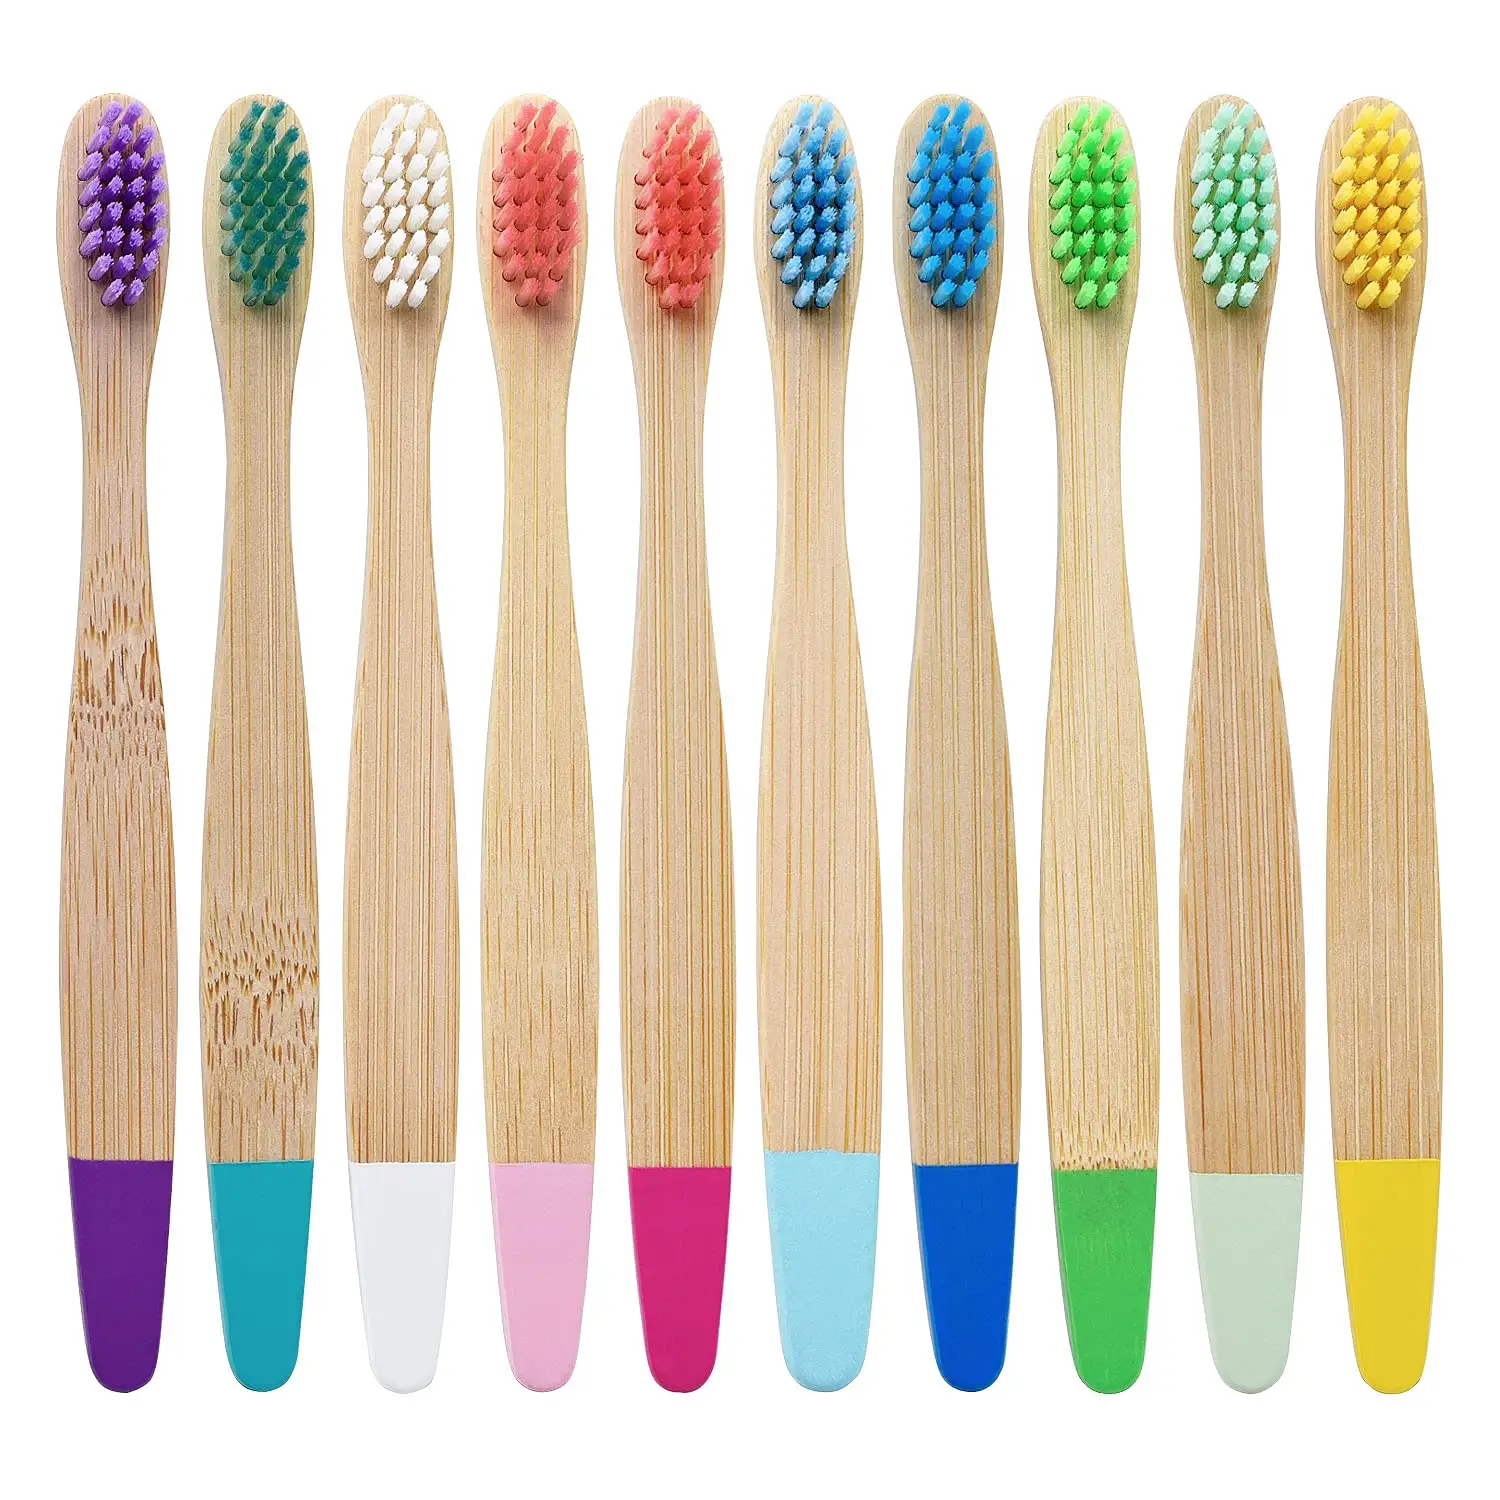 Cepillo de dientes de bambú de carbón para niños y adultos, cepillo de dientes de madera con logotipo personalizado